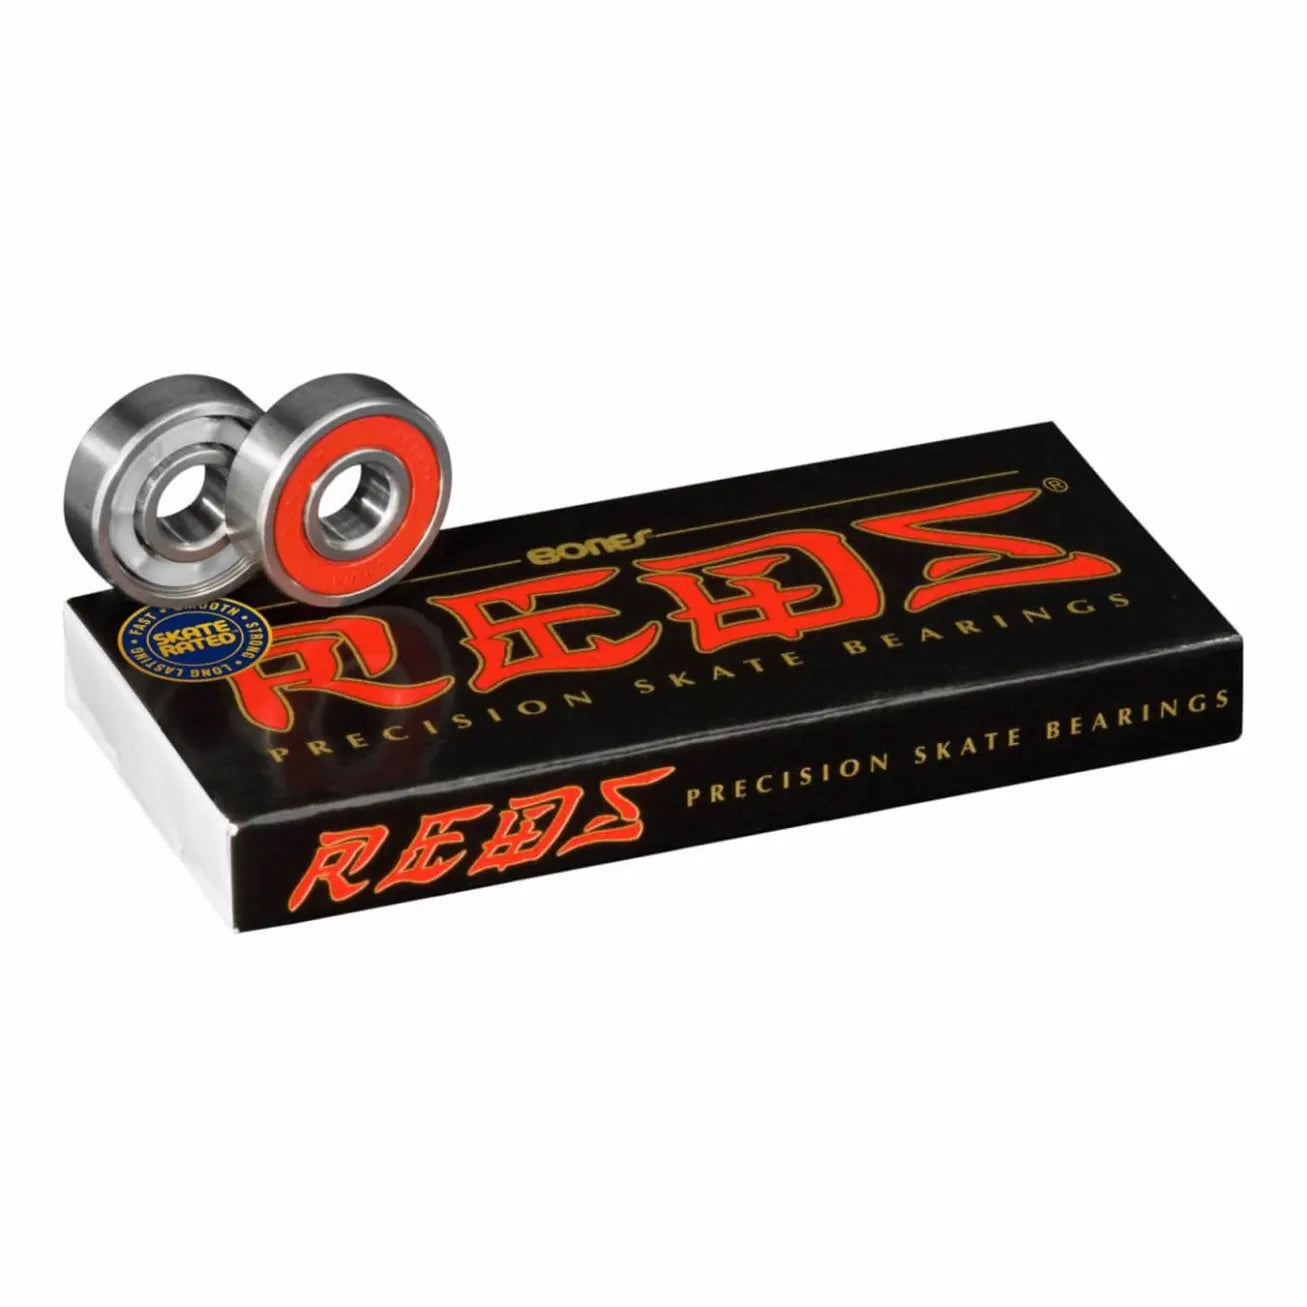 Bones Reds Skateboarding Bearings 8 Pack